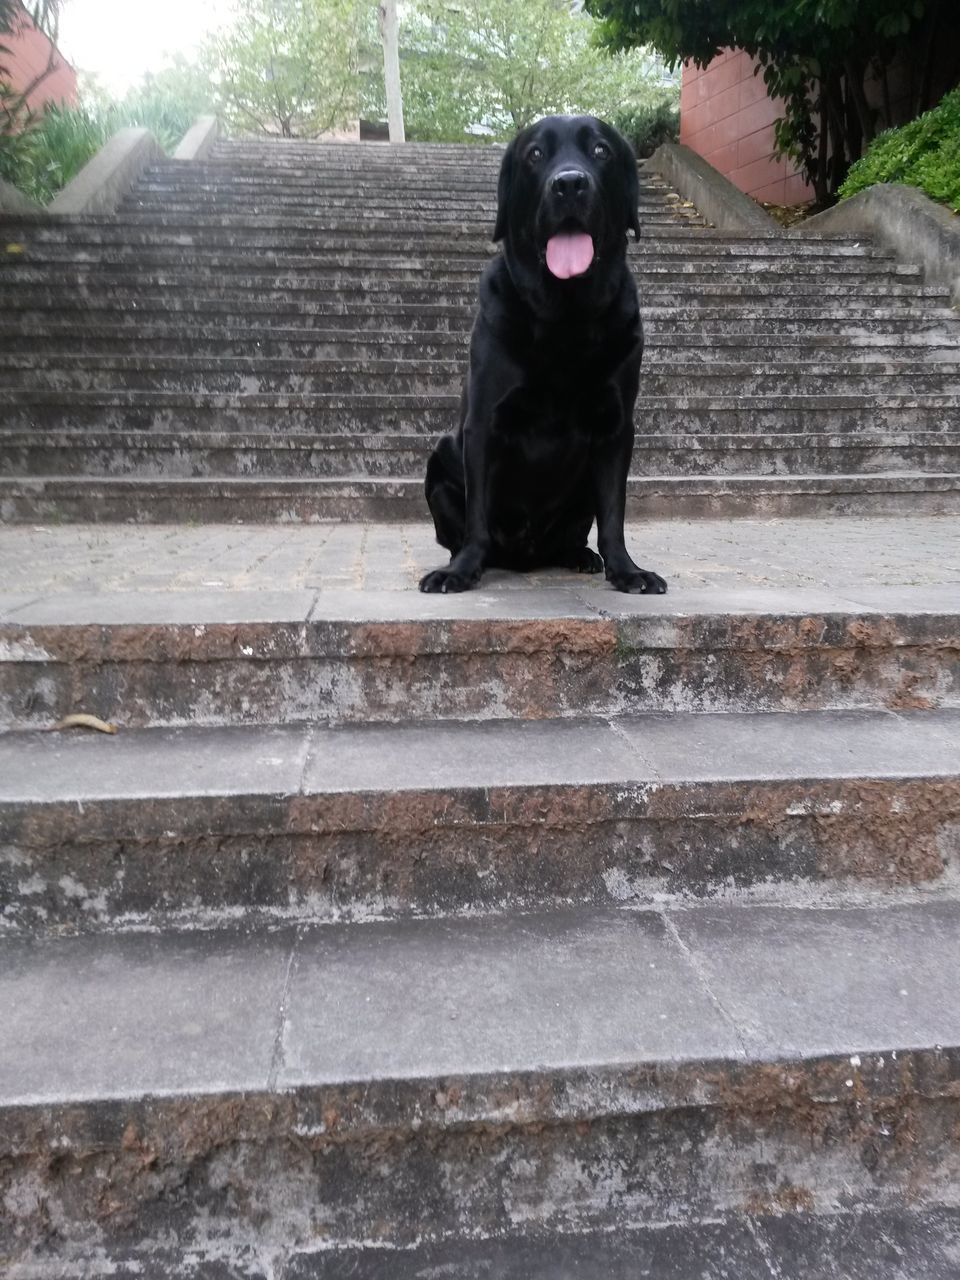 BLACK DOG SITTING ON STEPS OUTDOORS